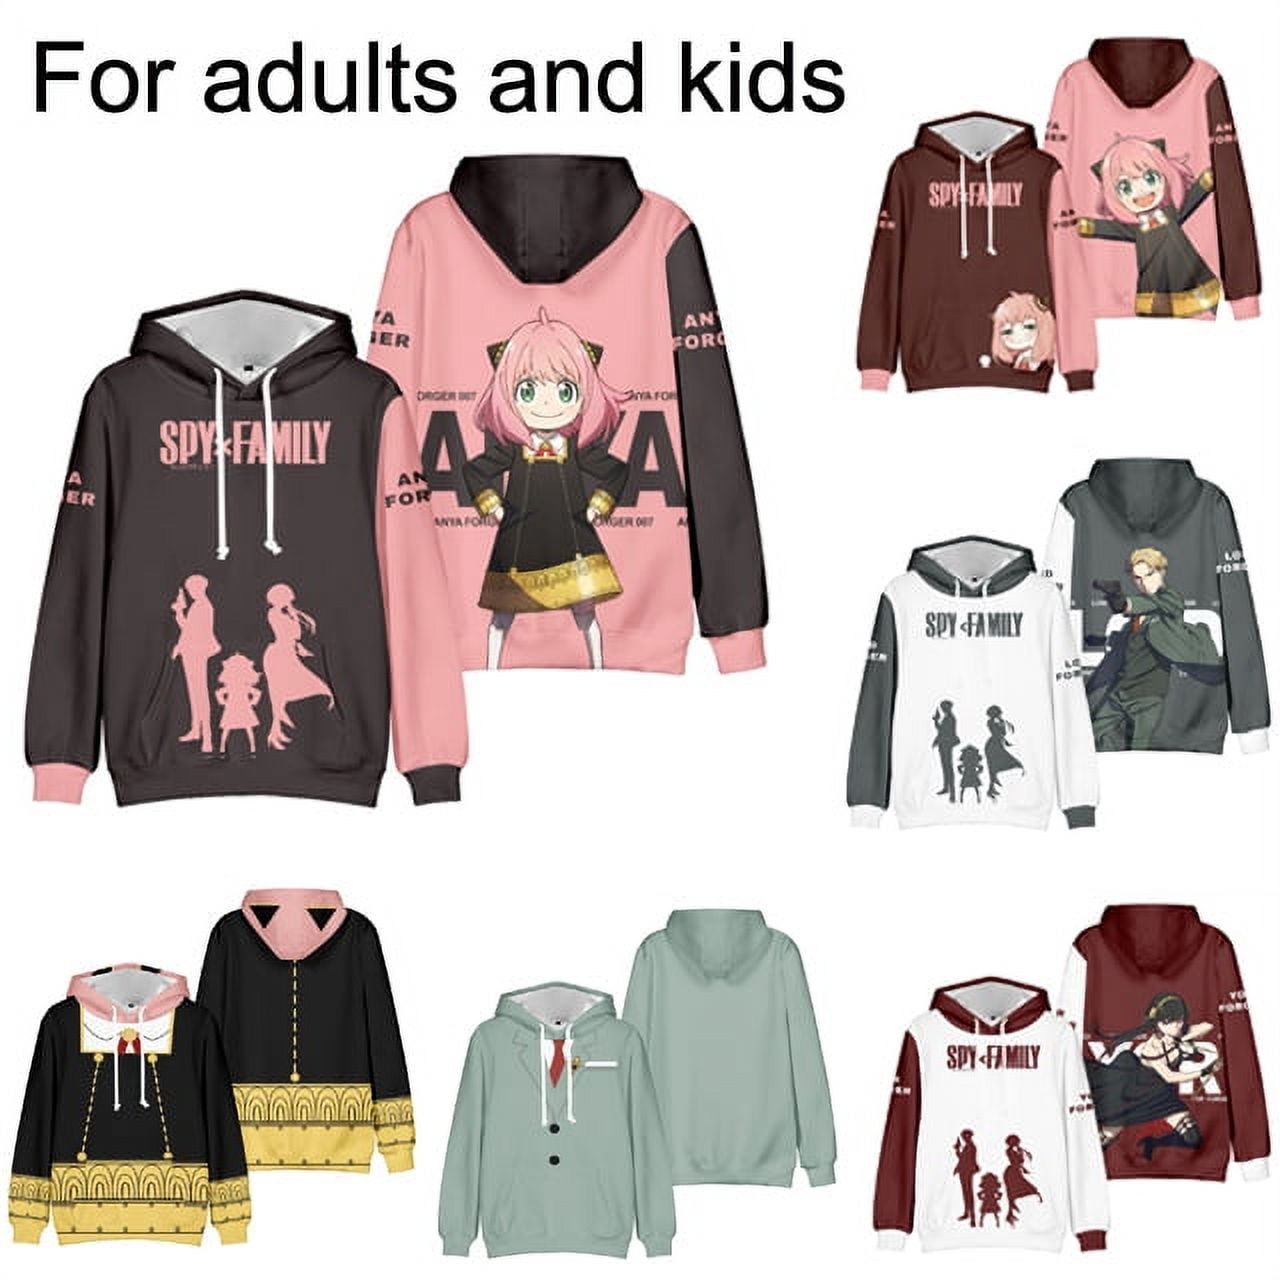 SPY X FAMILY Merch Hoodie Streetwear Clothes Cosplay Sweatshirt Harajuku  Long Sleeve 